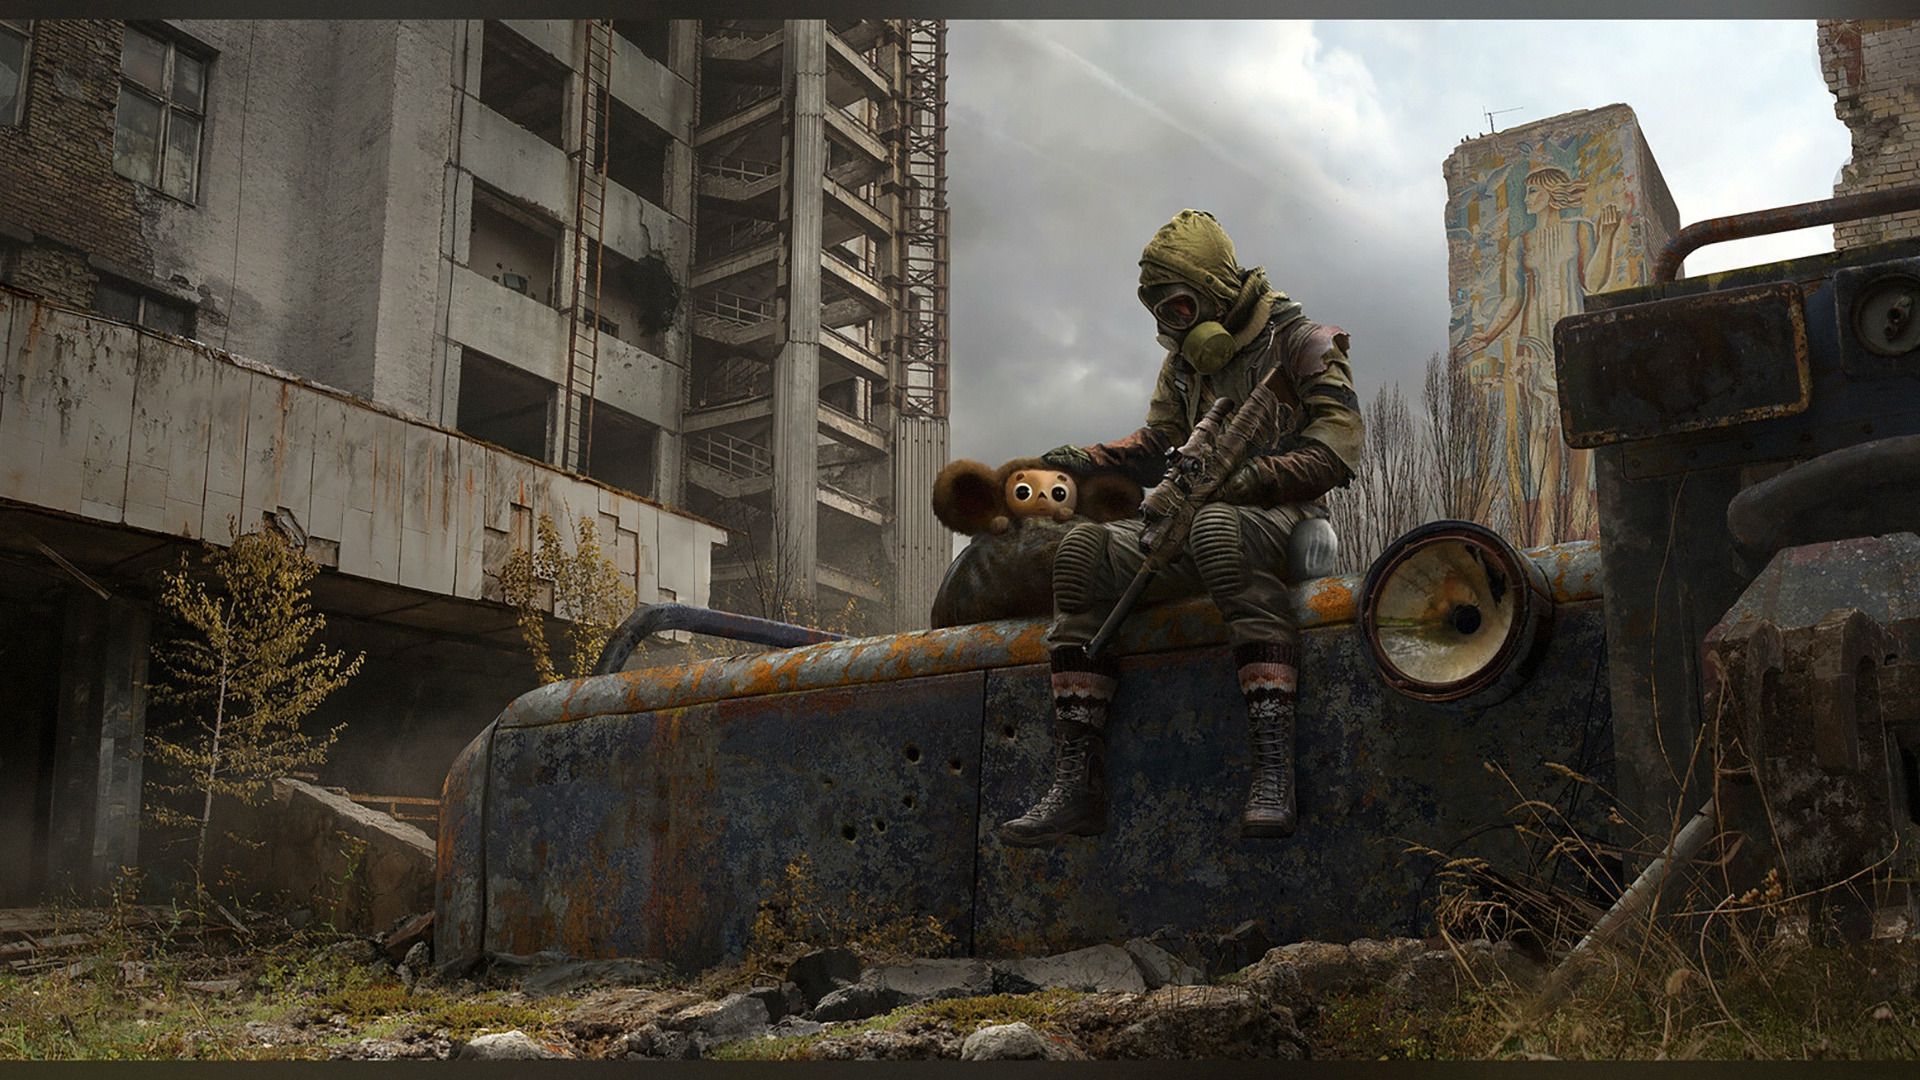 HD wallpaper: S.T.A.L.K.E.R., S.T.A.L.K.E.R.: Shadow of Chernobyl, Game, Stalker  2